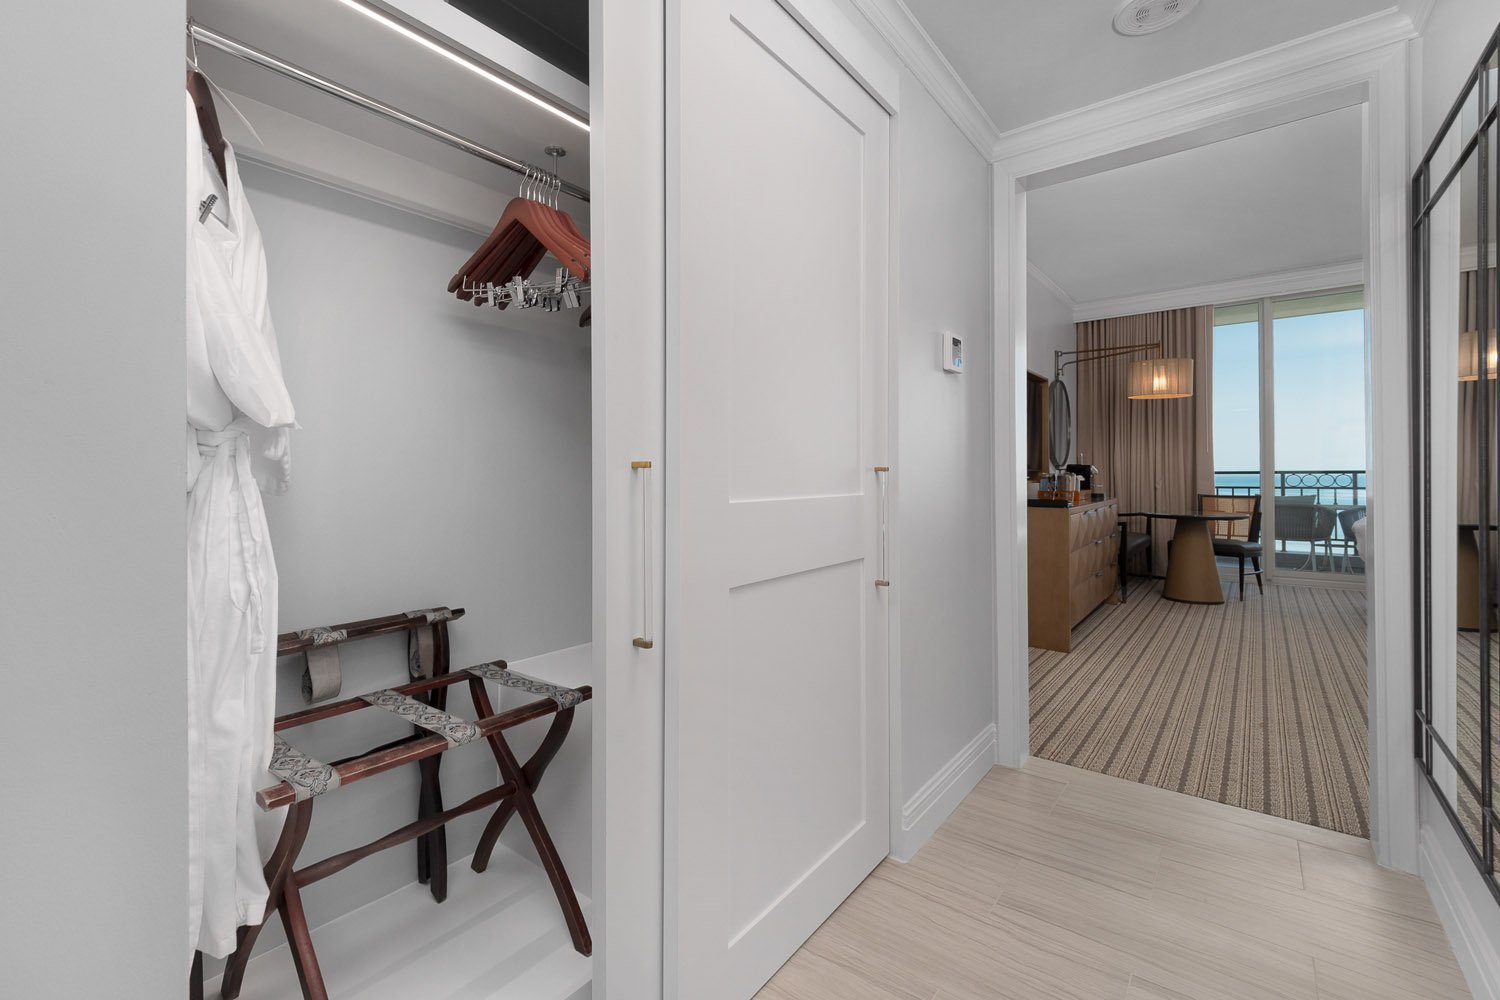 Custom closet shelving and doors in Ritz-Carlton guest rooms